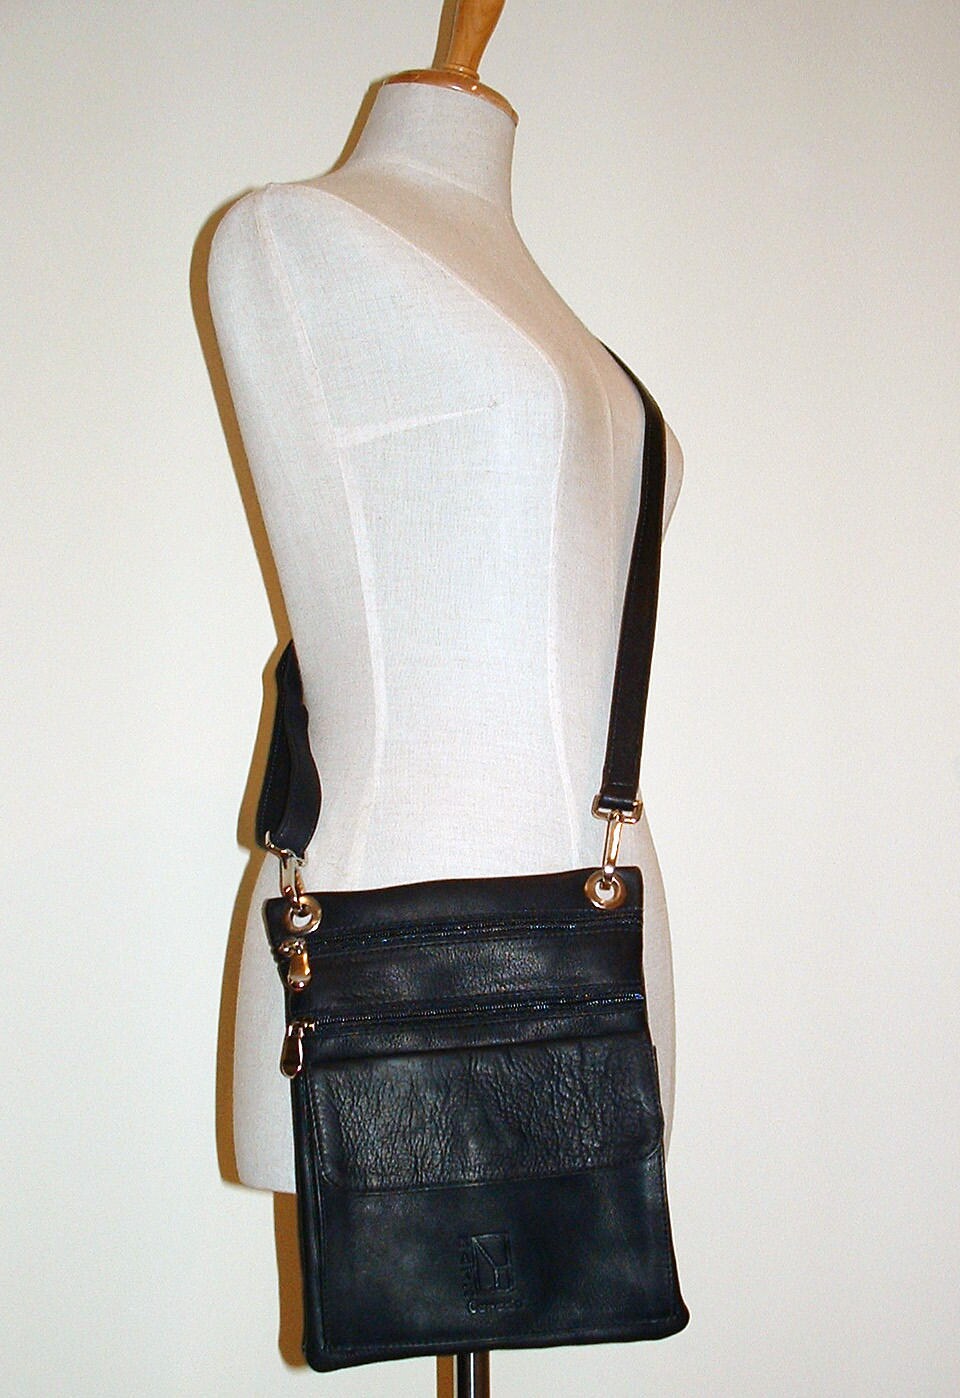 Small BLACK GENUINE LEATHER Crossbody Bag by Katz, Women's Small Leath –  Katz Leather